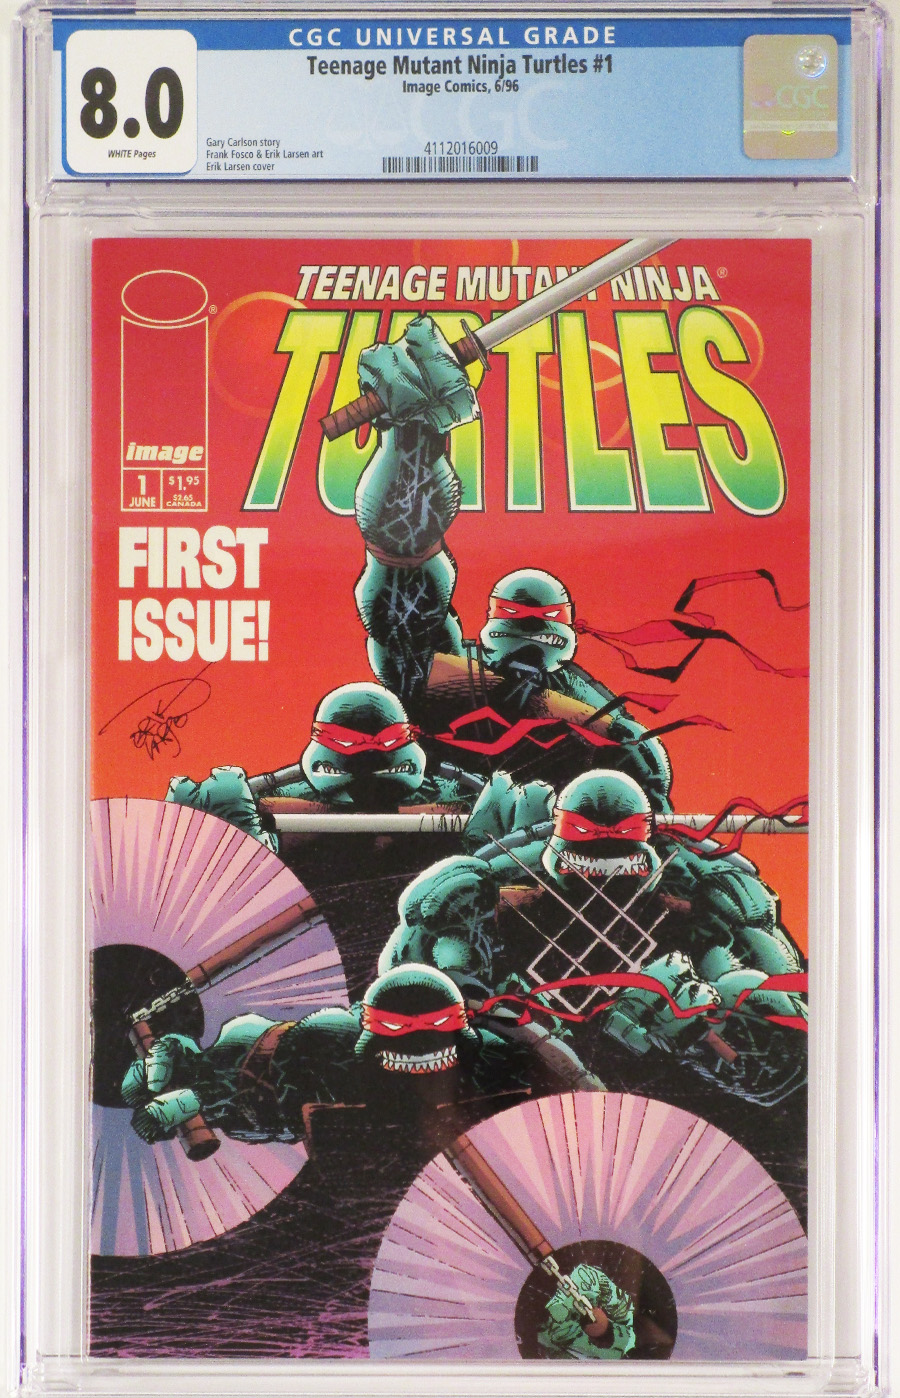 Teenage Mutant Ninja Turtles Vol 3 #1 Cover B CGC 8.0